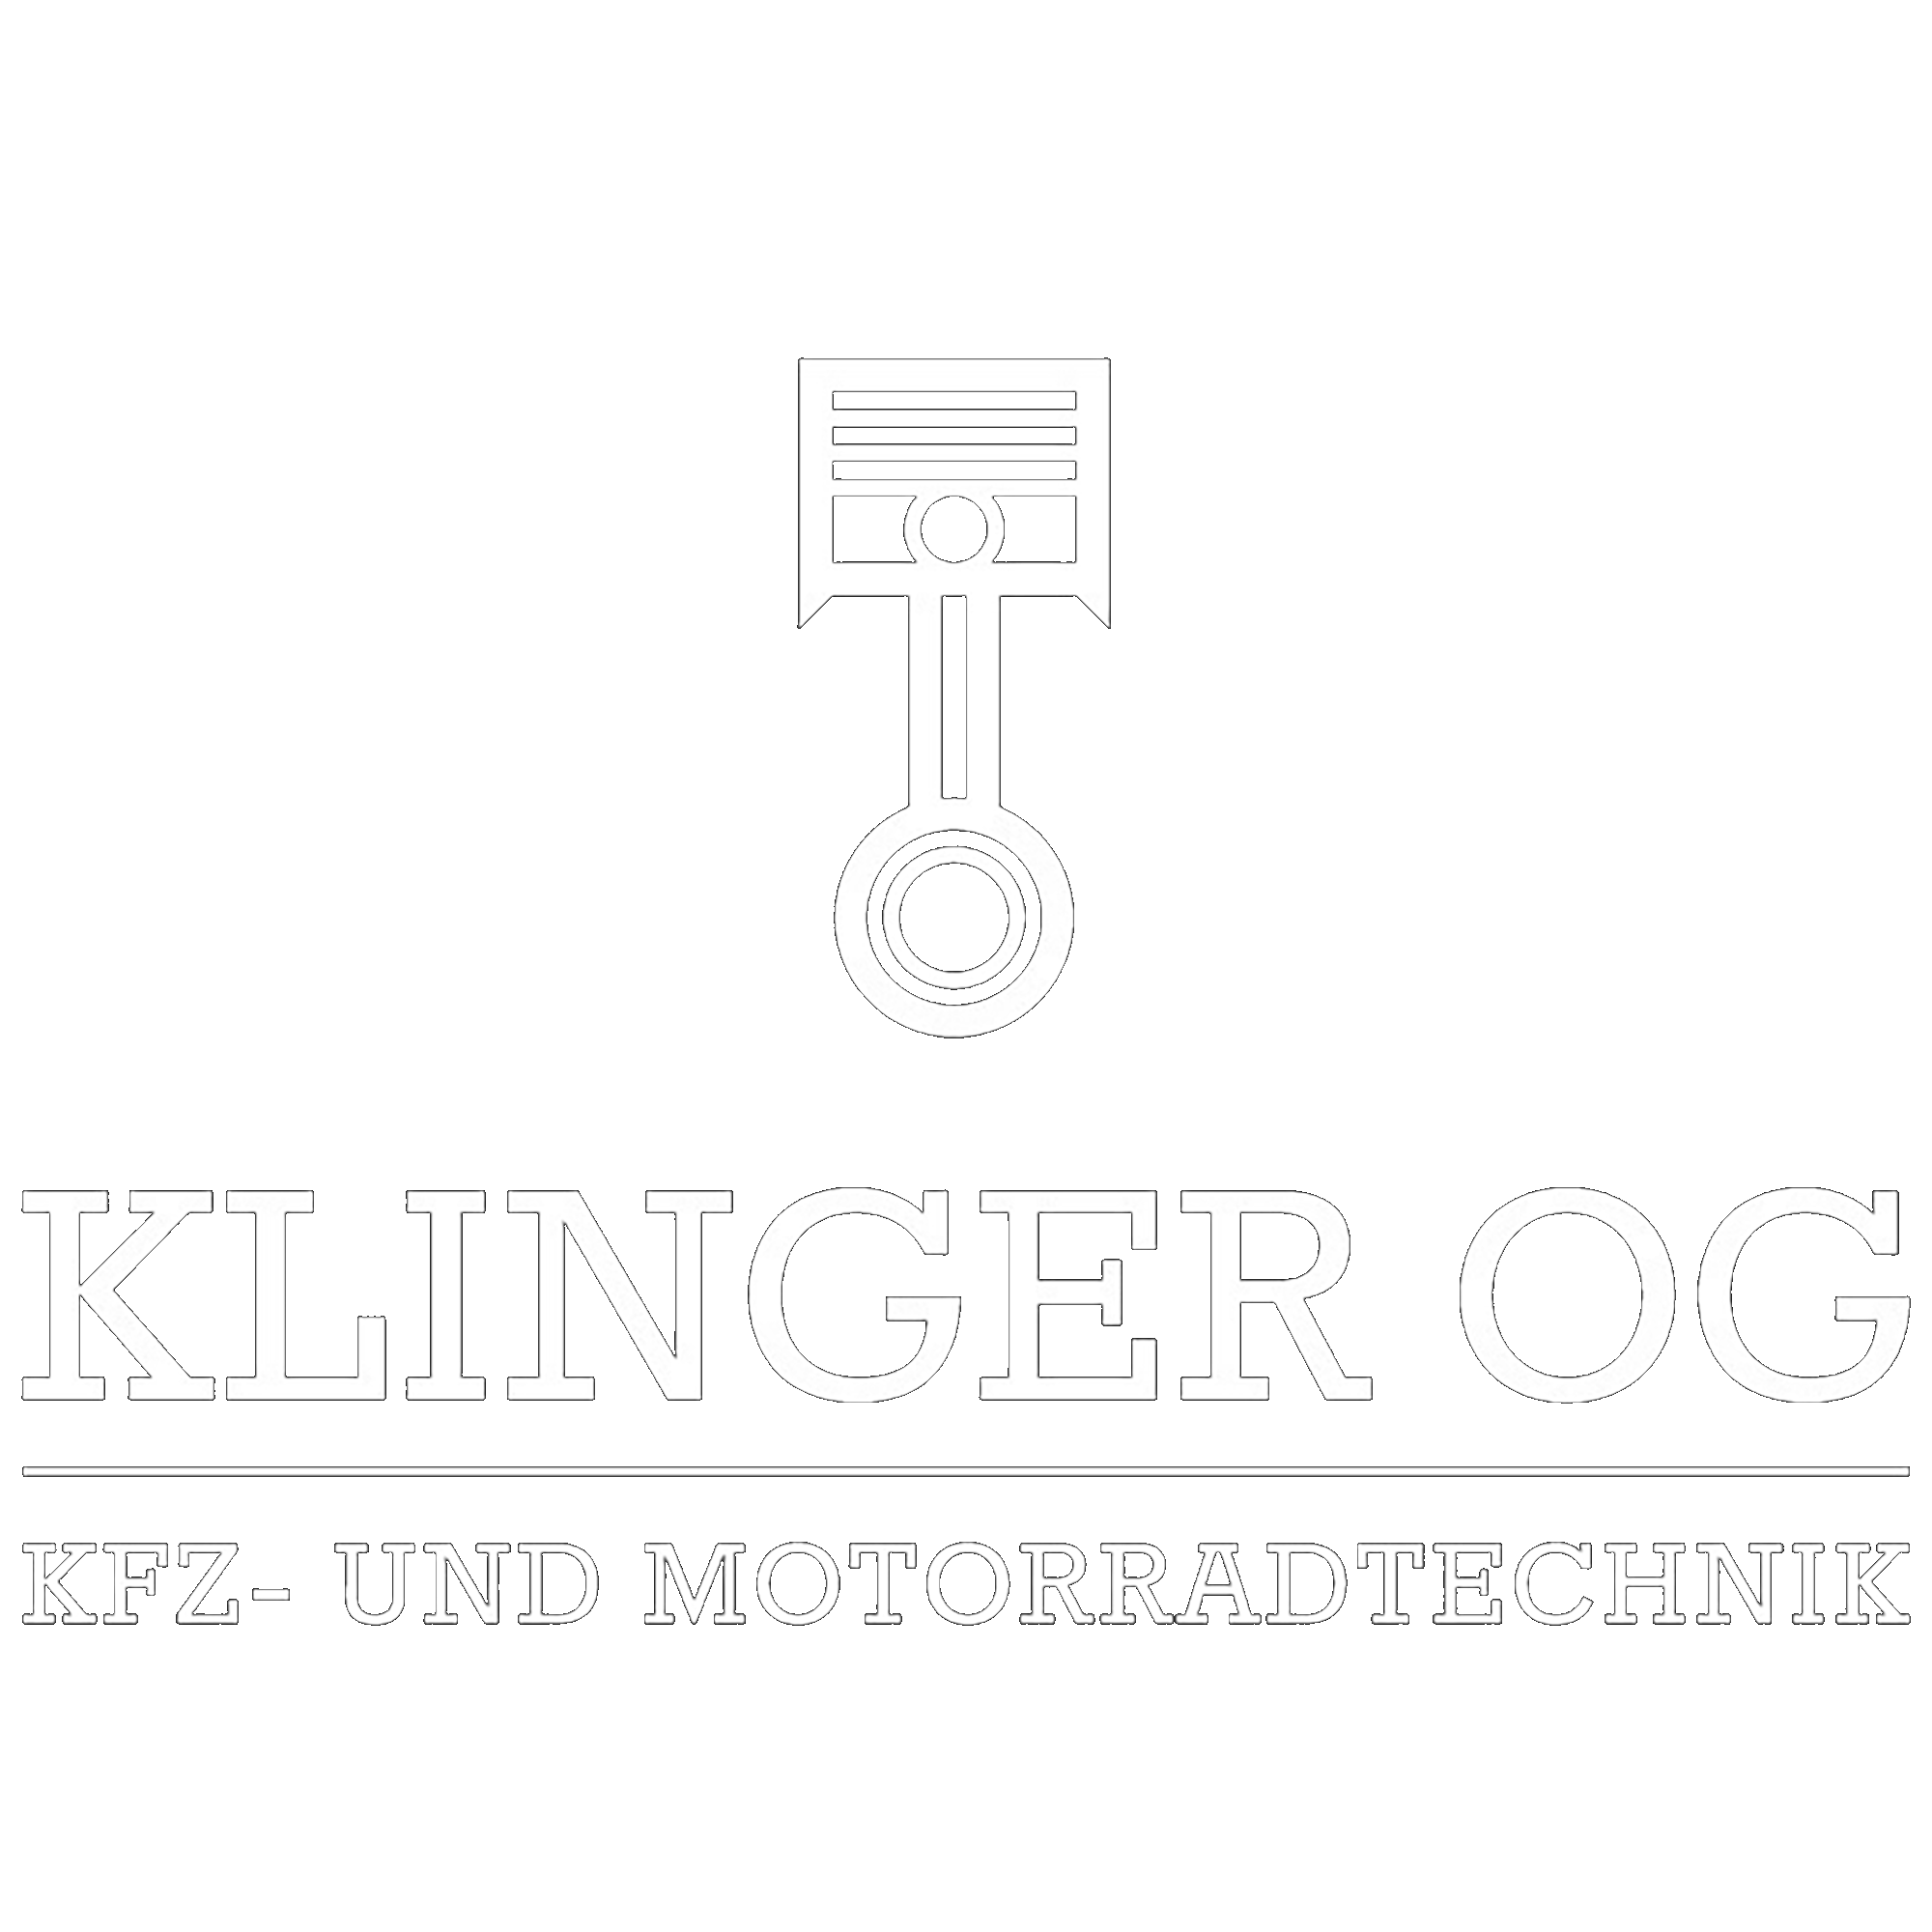 Klinger Racing Logo